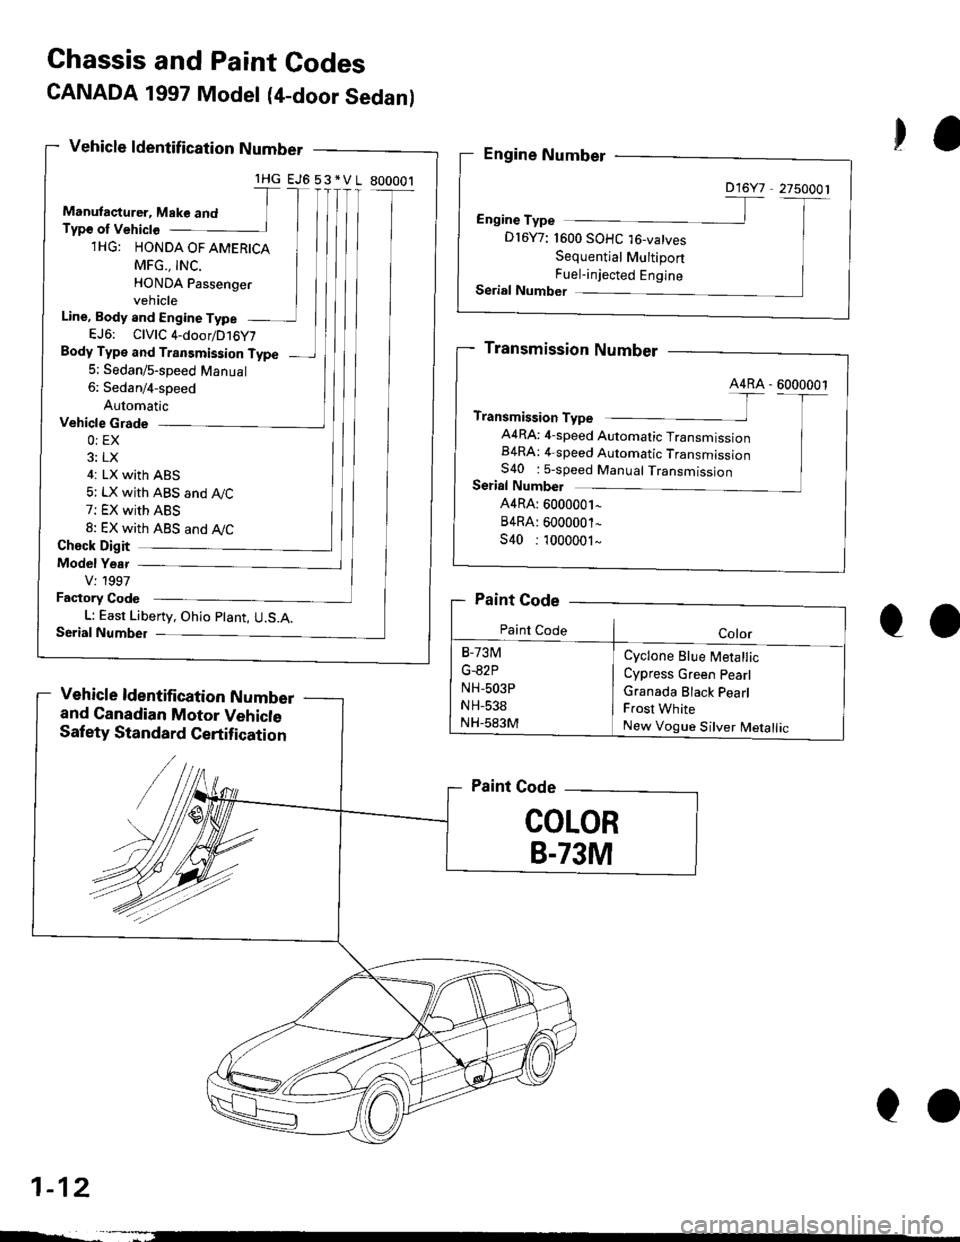 HONDA CIVIC 1996 6.G Workshop Manual Chassis and Paint Godes
CANADA 1997 Modet (4-door Sedan)
Vehicle ldentification Number
and Canadian Motor Vehicle
Safety Standard Certification
1-12
]l
00
Paint Code
COLOR
B.73M
ea
lHG EJ6 53 *V L 800